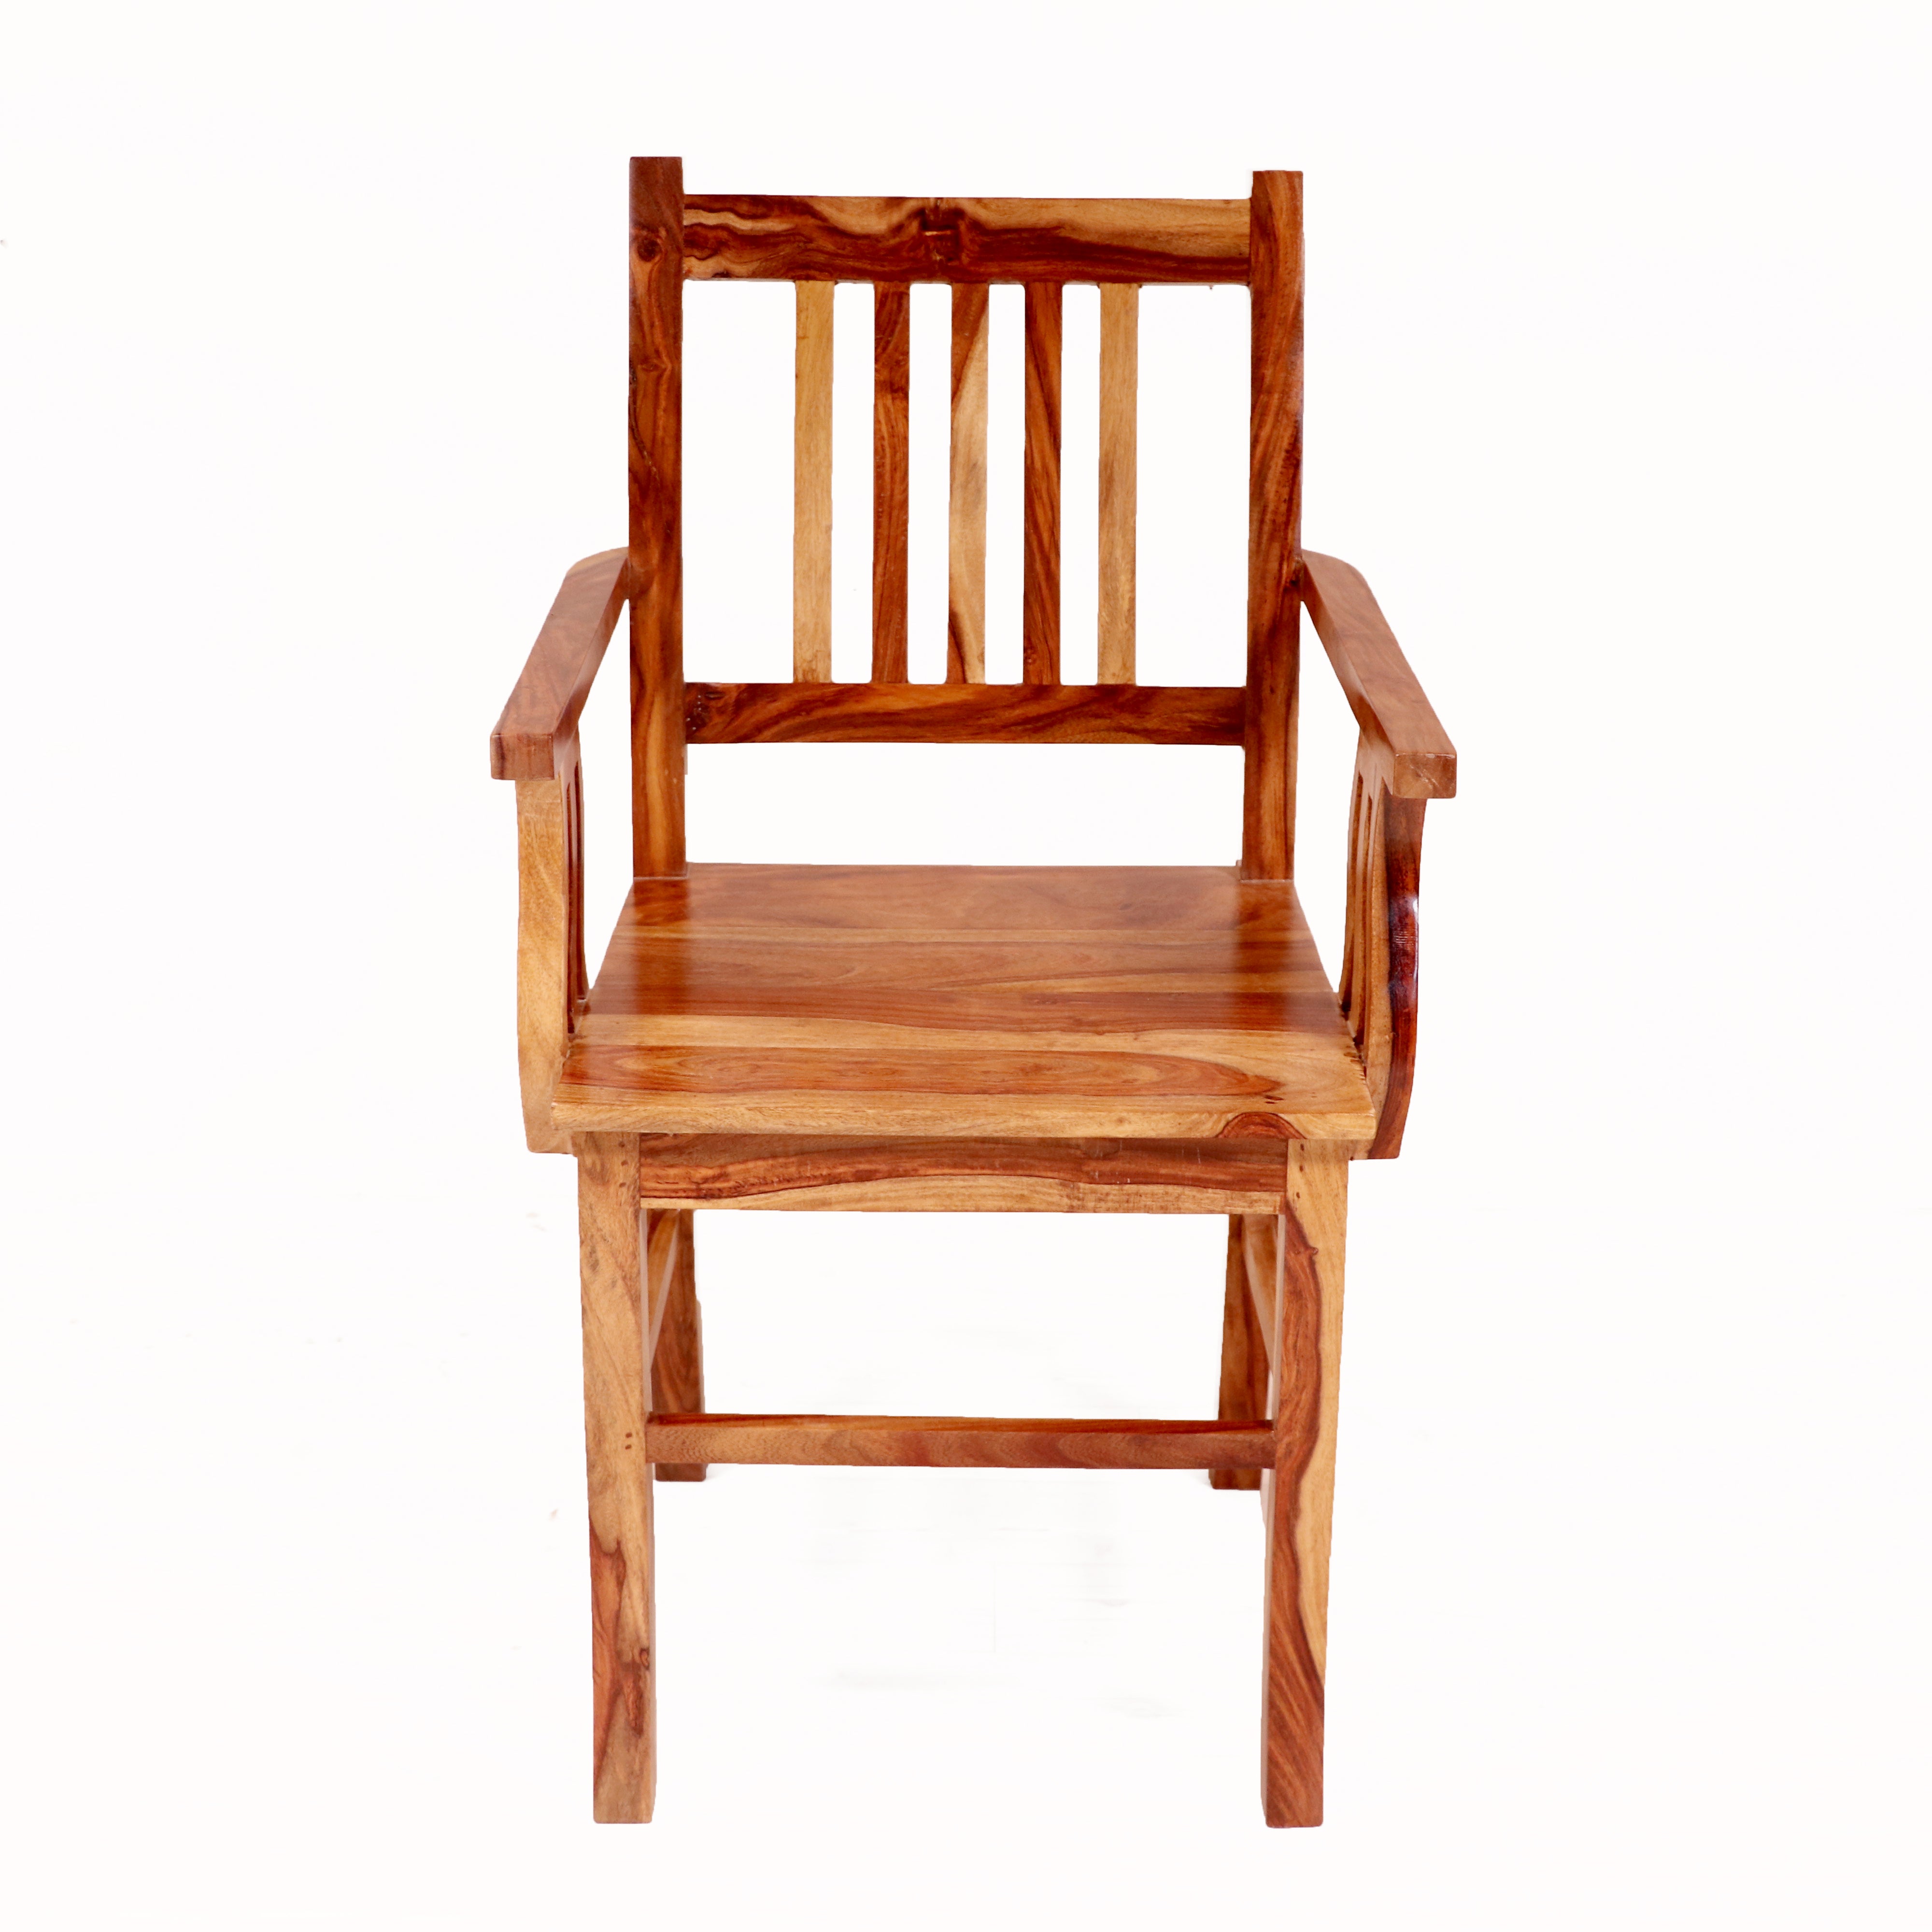 Simple classic sturdy Chair Arm Chair